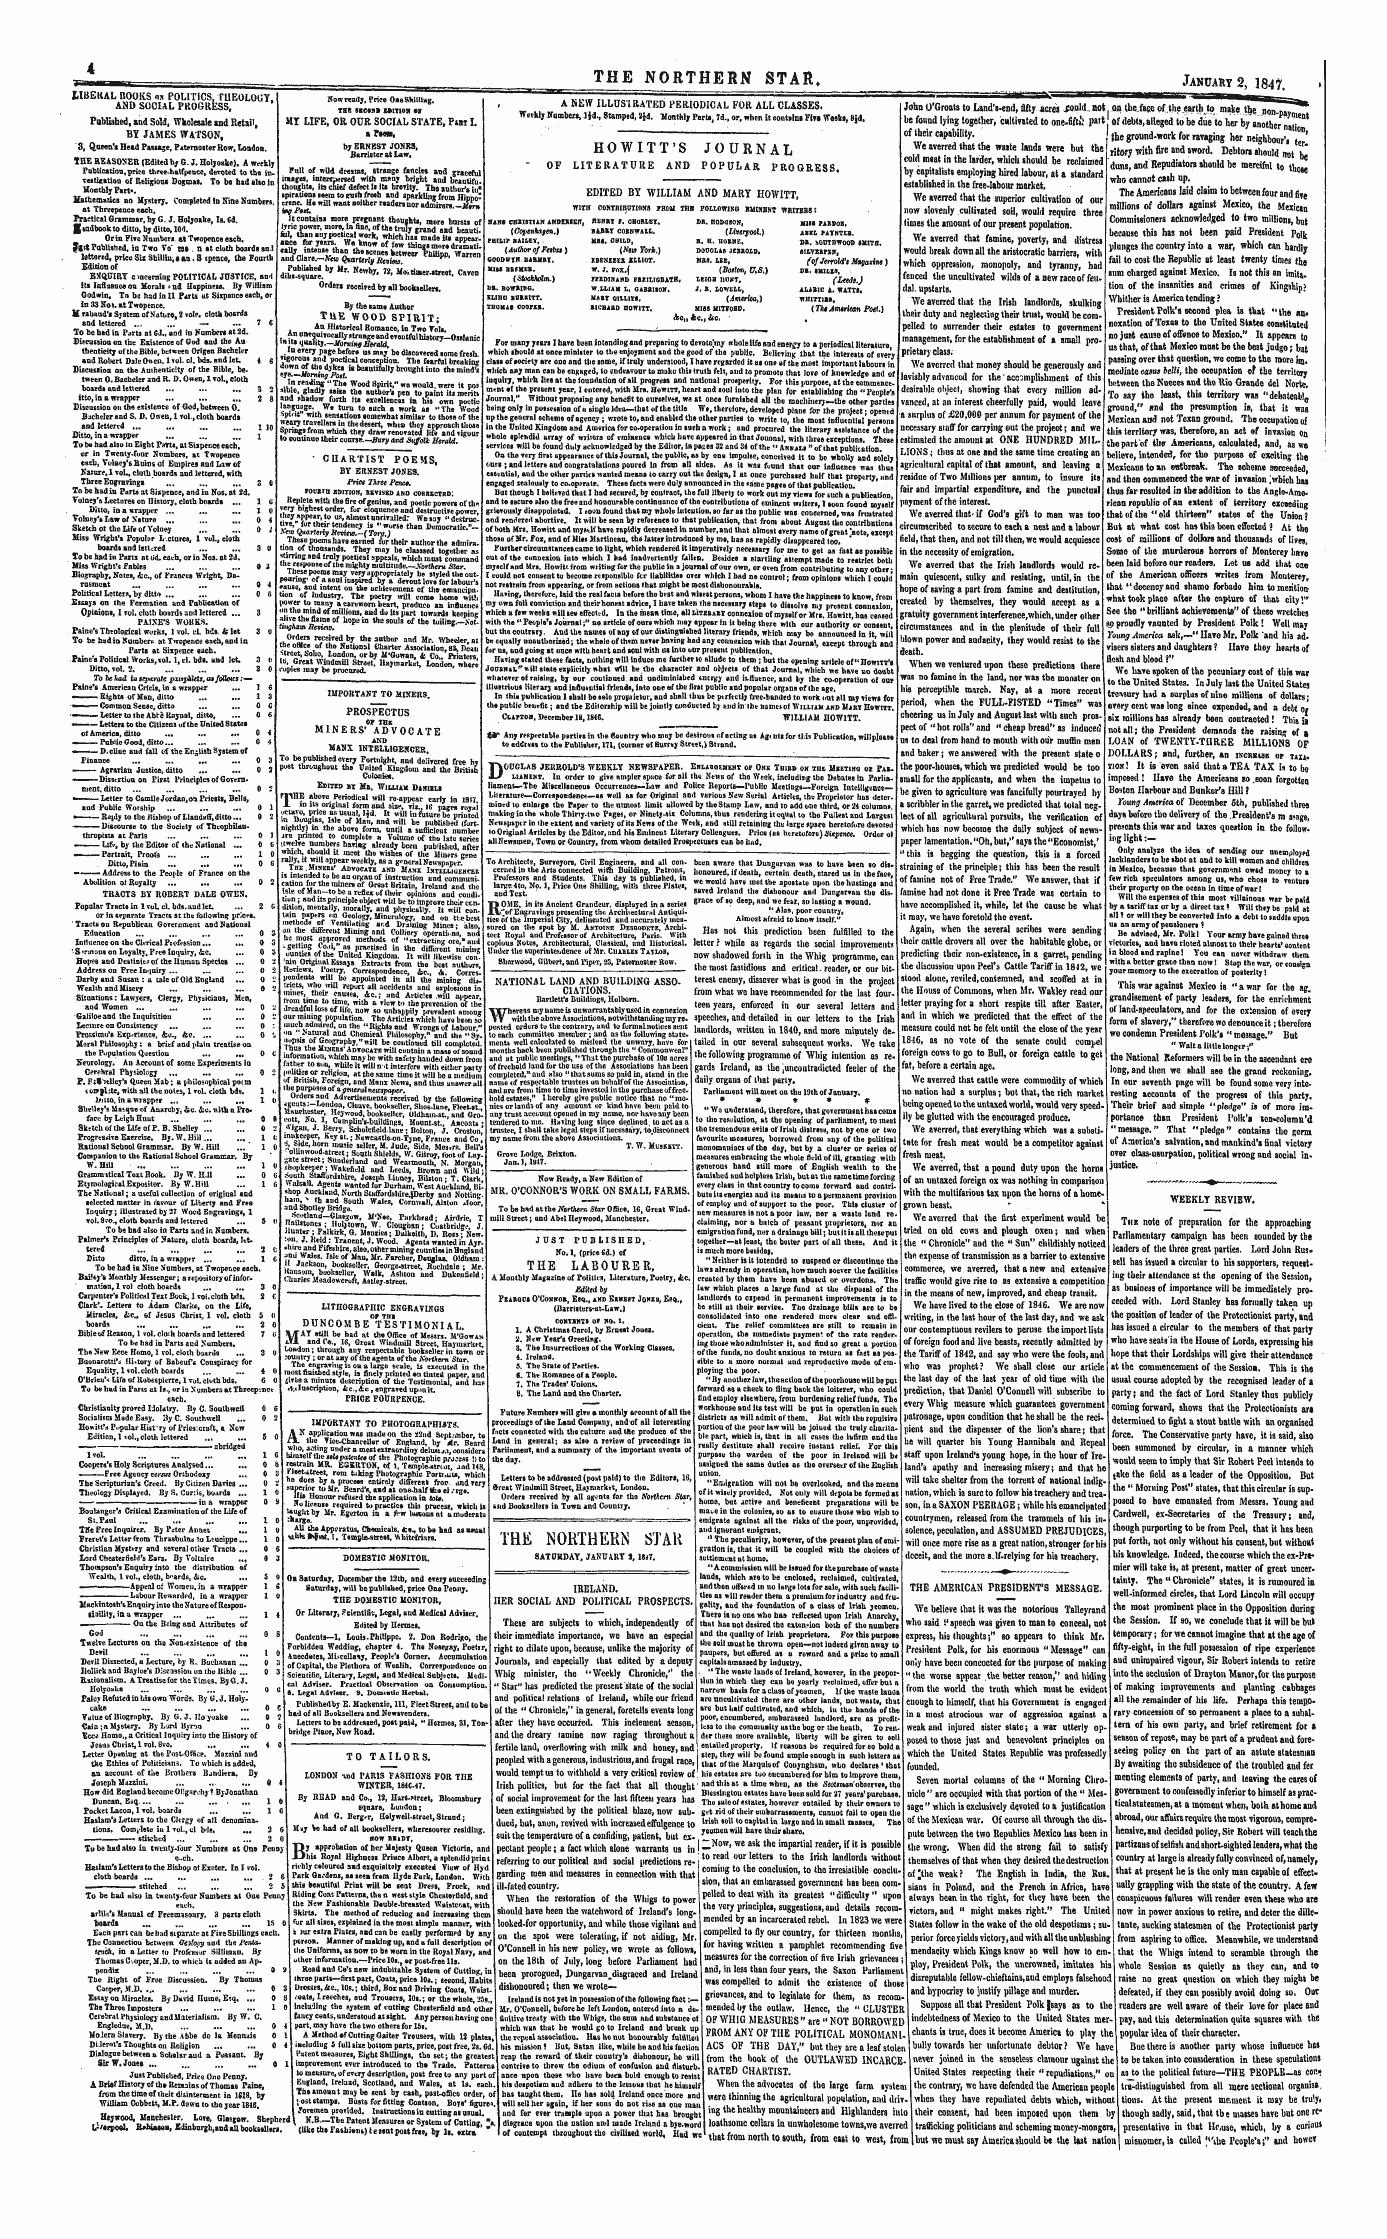 Northern Star (1837-1852): jS F Y, 1st edition - The Northern Star Saturday, January J, 18*7.